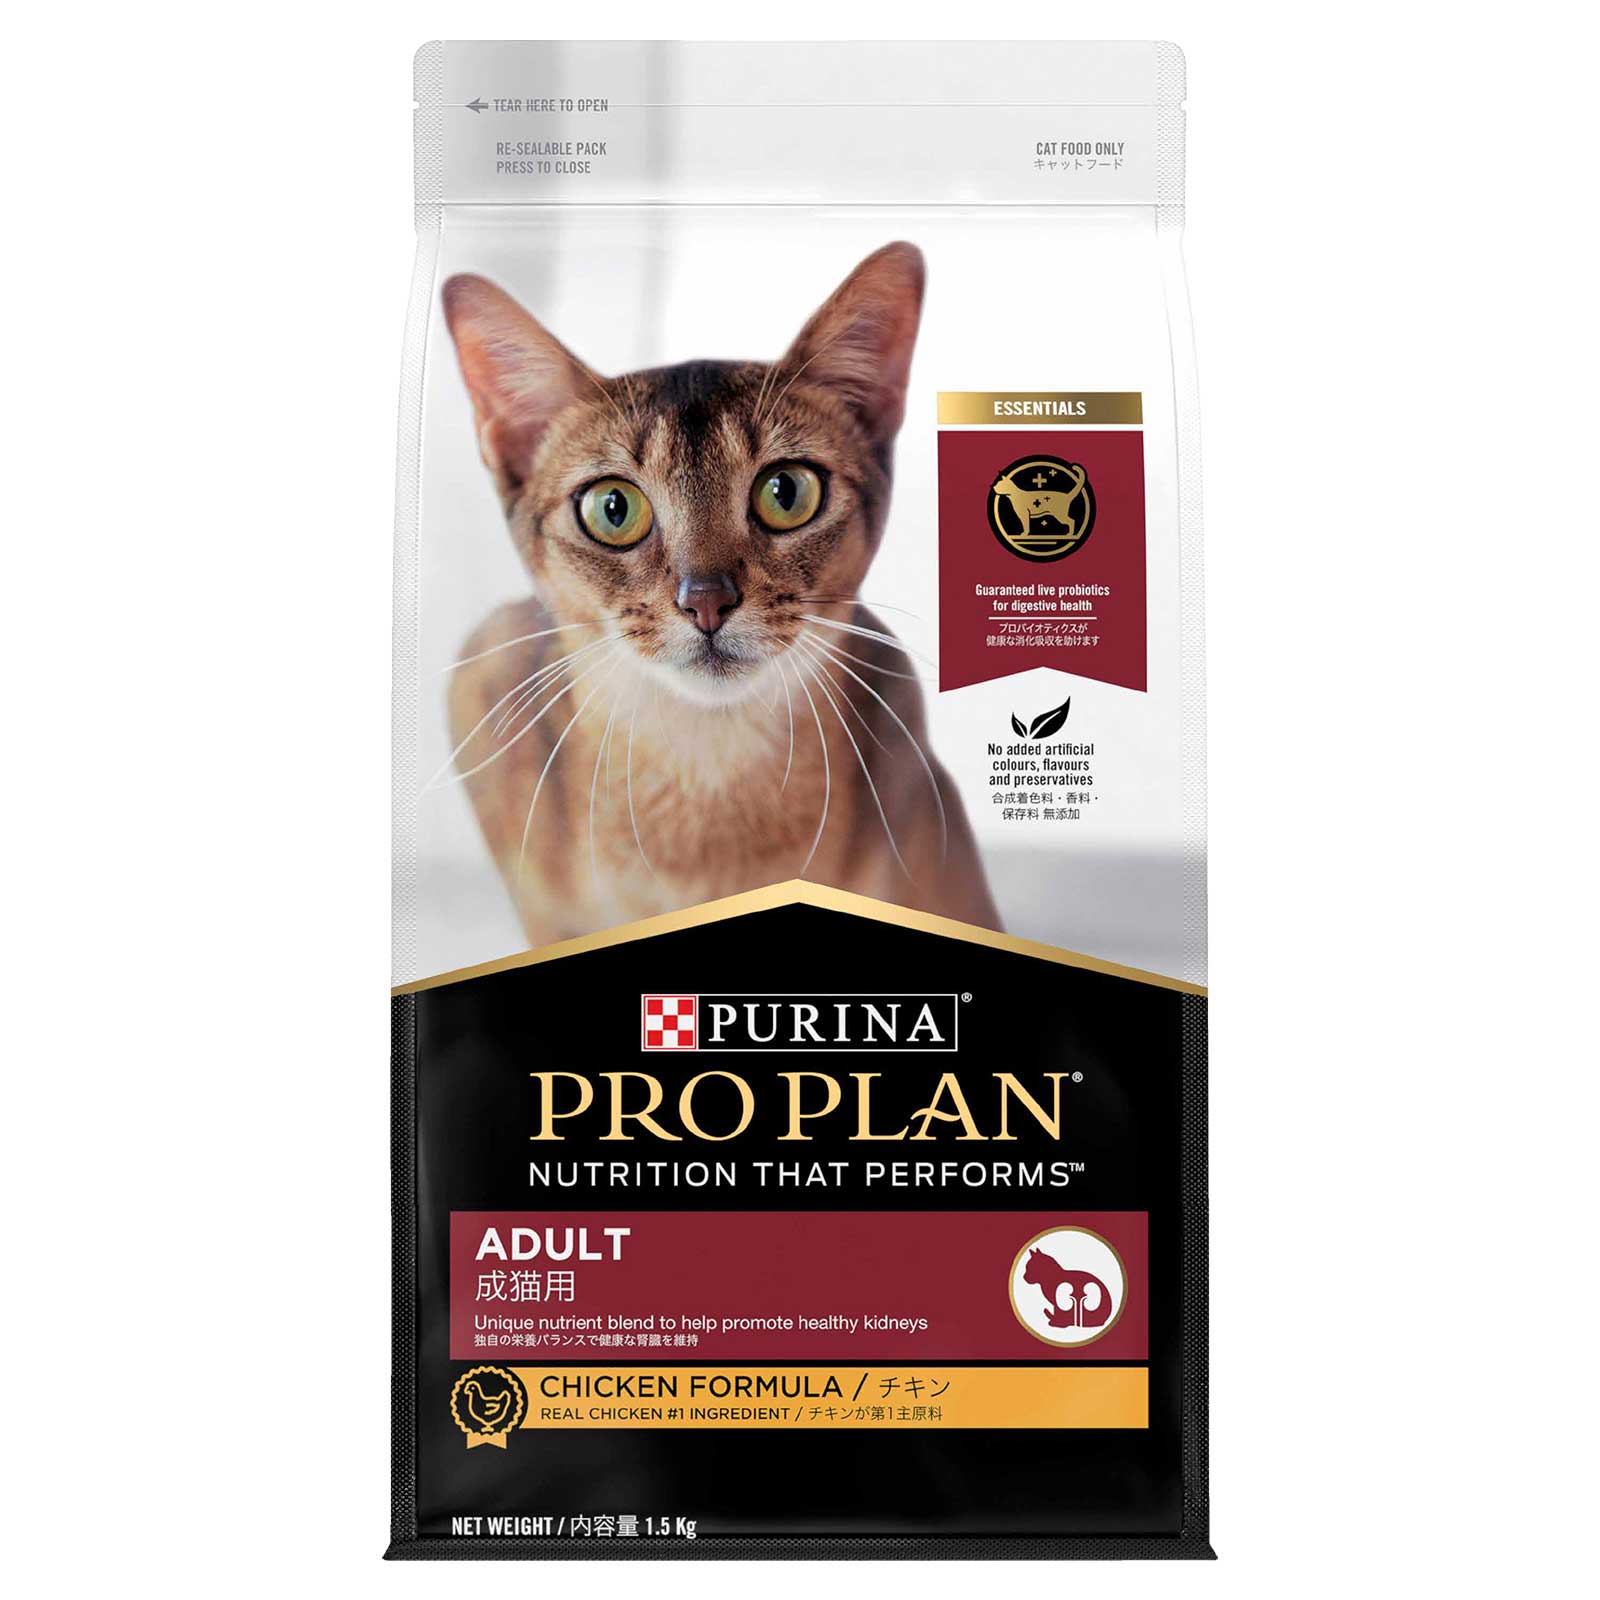 Pro Plan Cat Food Adult Chicken